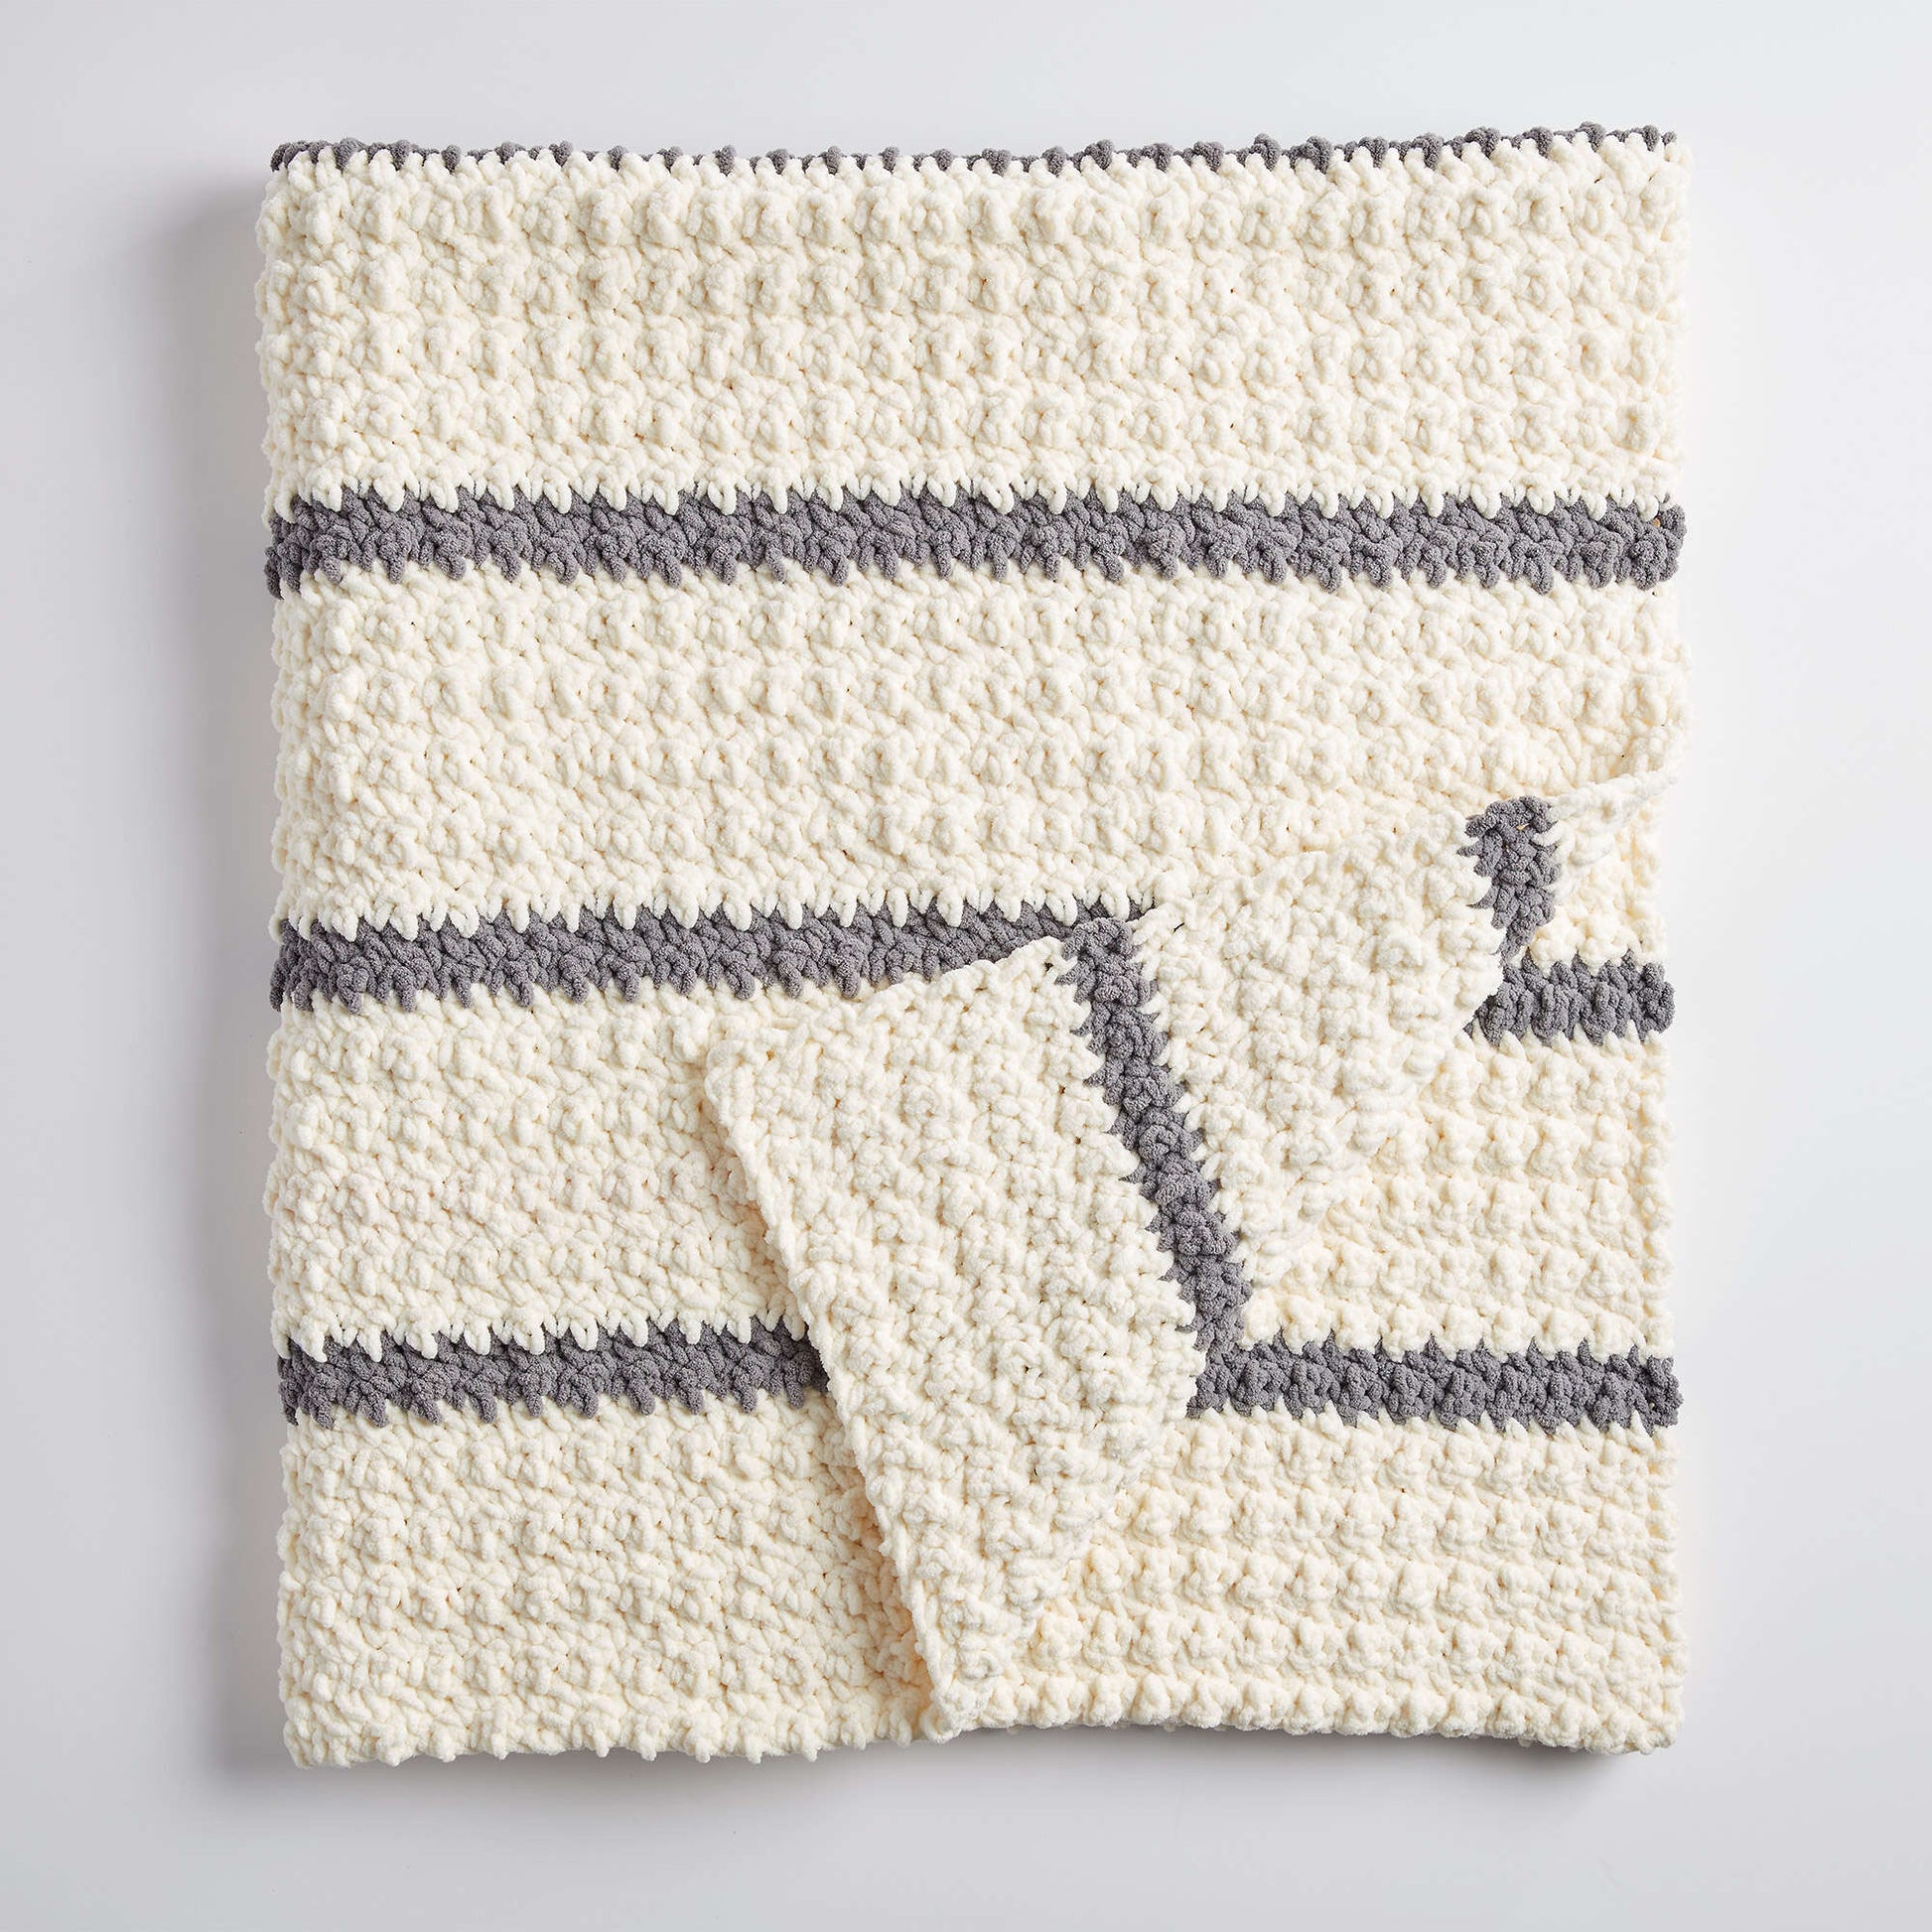 Bernat Pin Stripe Crochet Blanket Crochet Blanket made in Bernat Blanket yarn